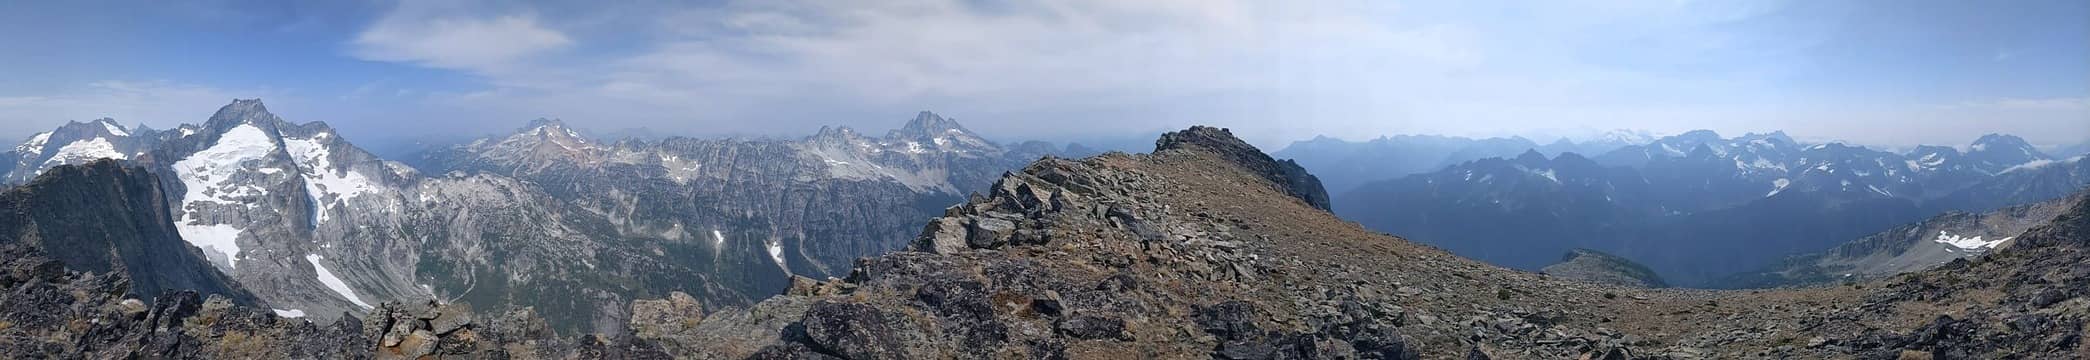 Summit panorama